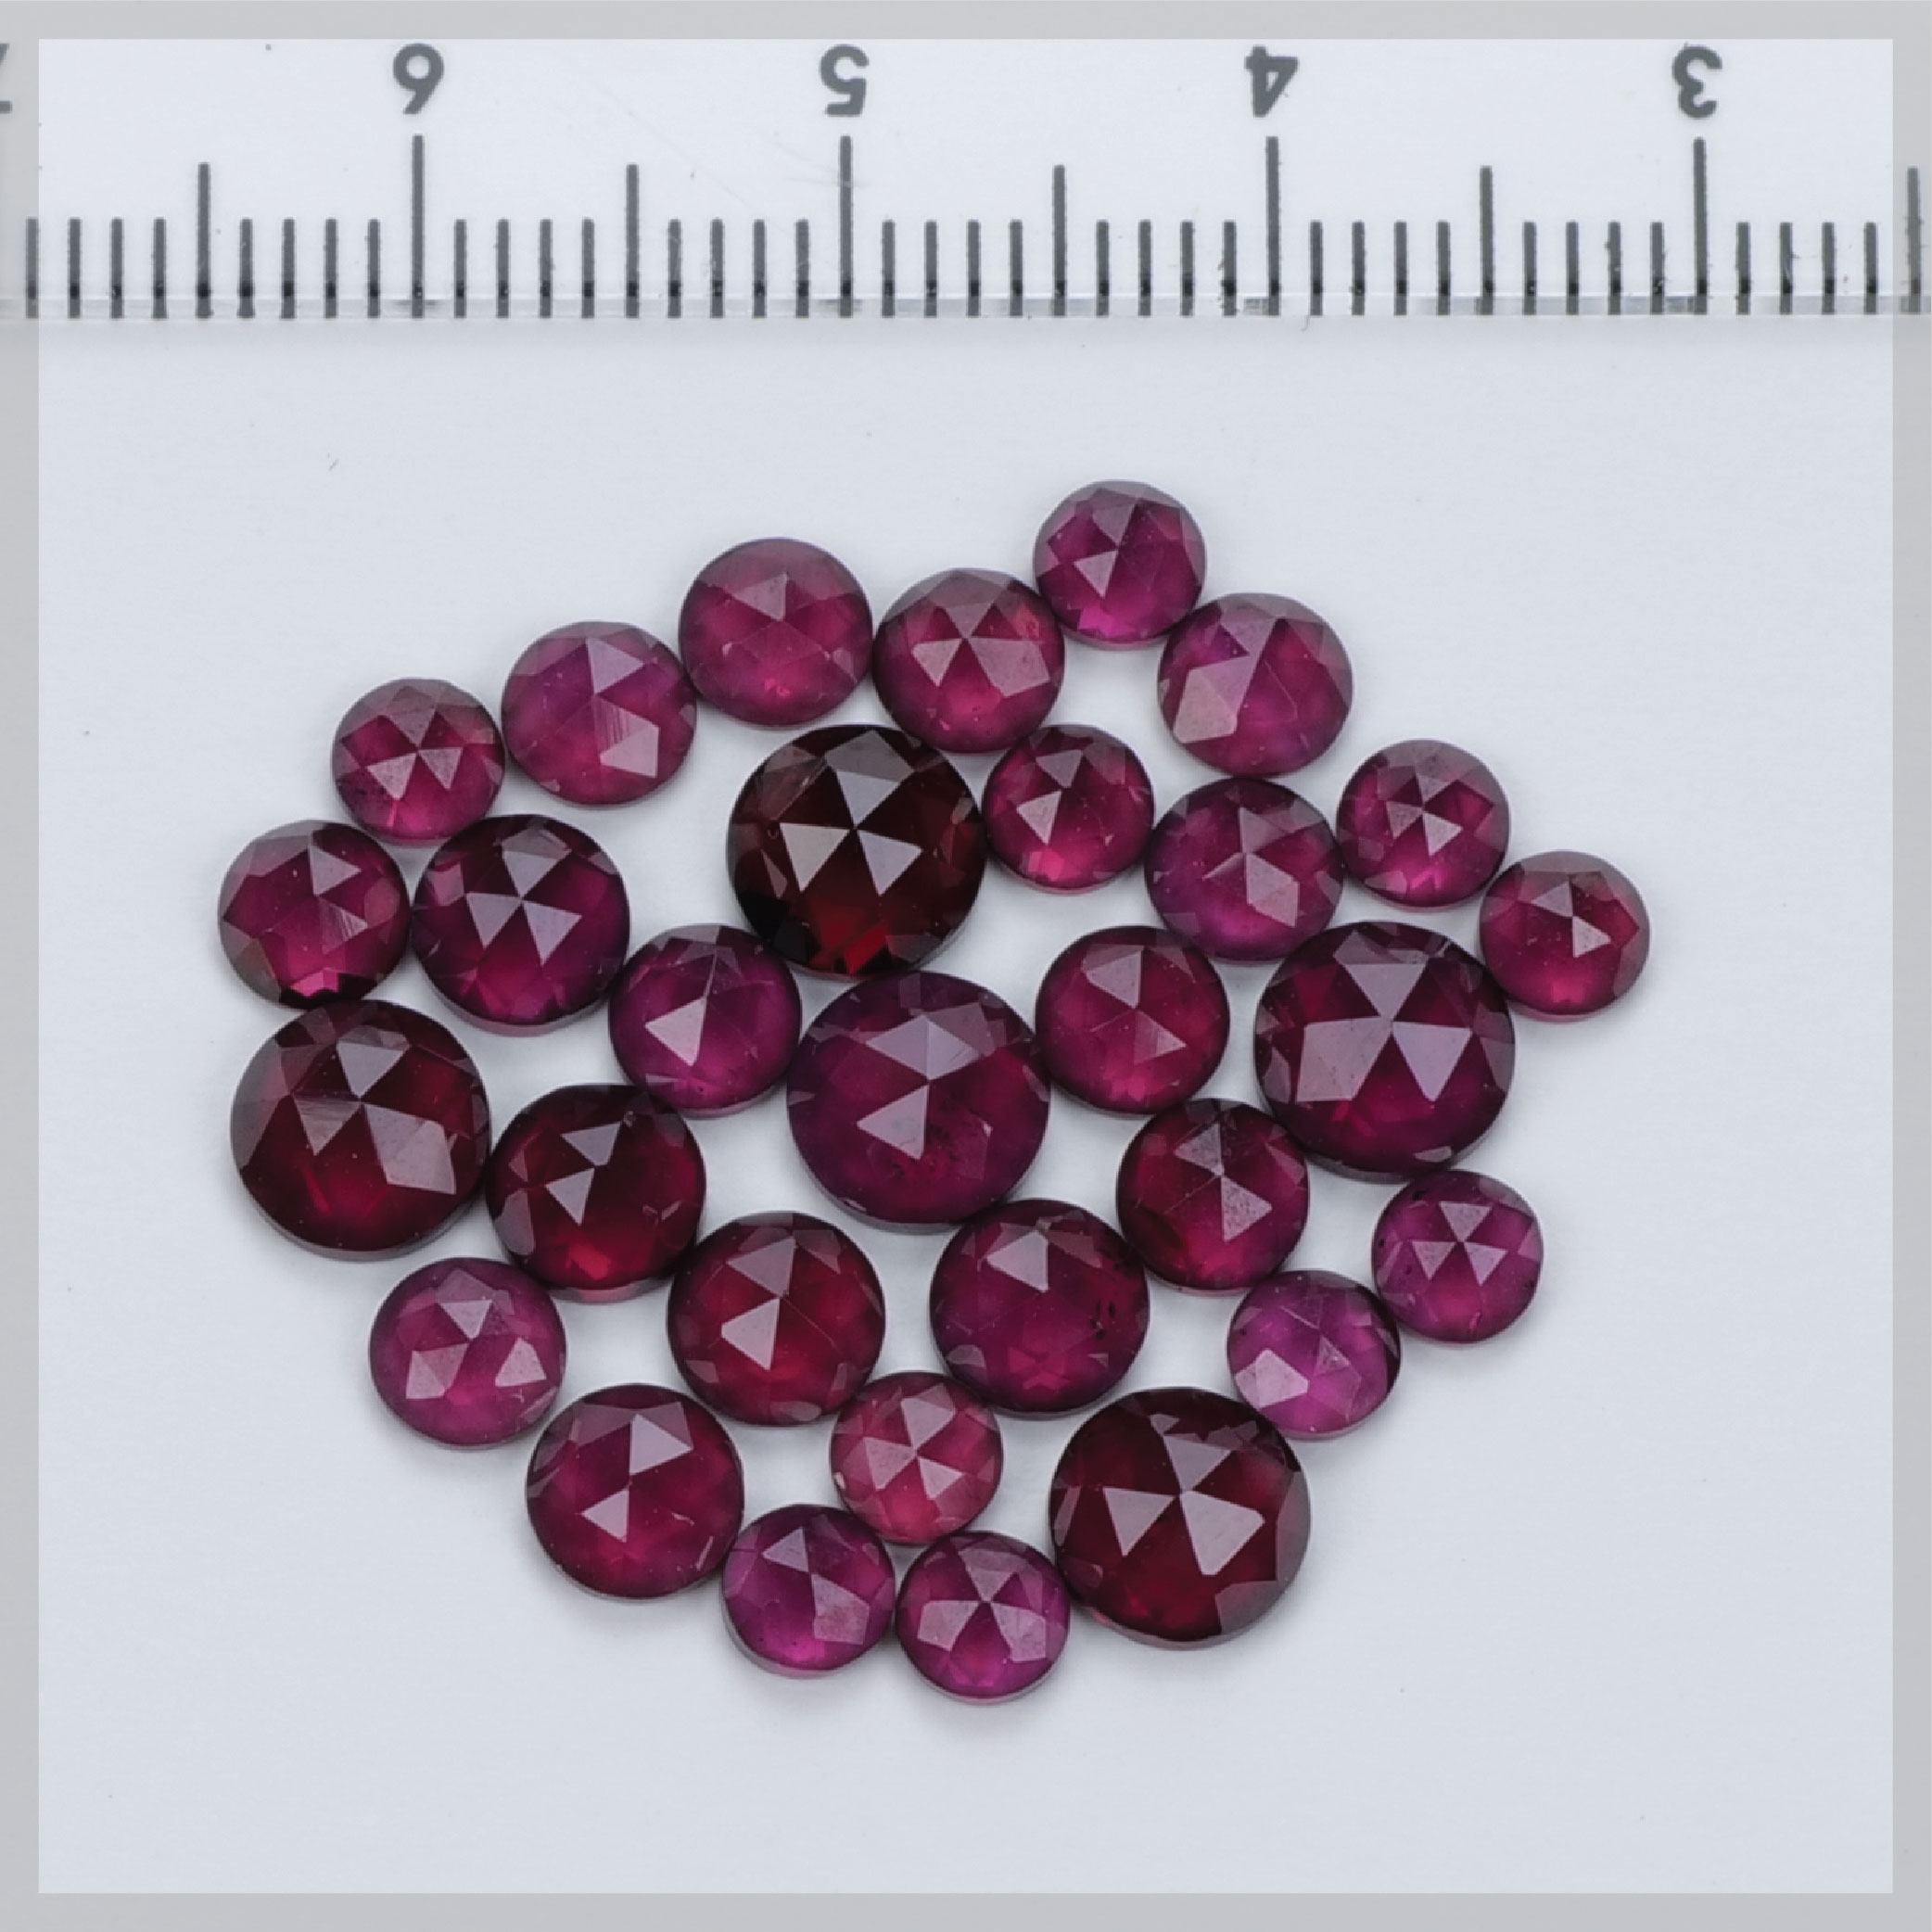 Lionel Green Street Råd indvirkning Rhodolite Garnet Rose Cut Gemstones (Round) 4-6mm - The Bazaar